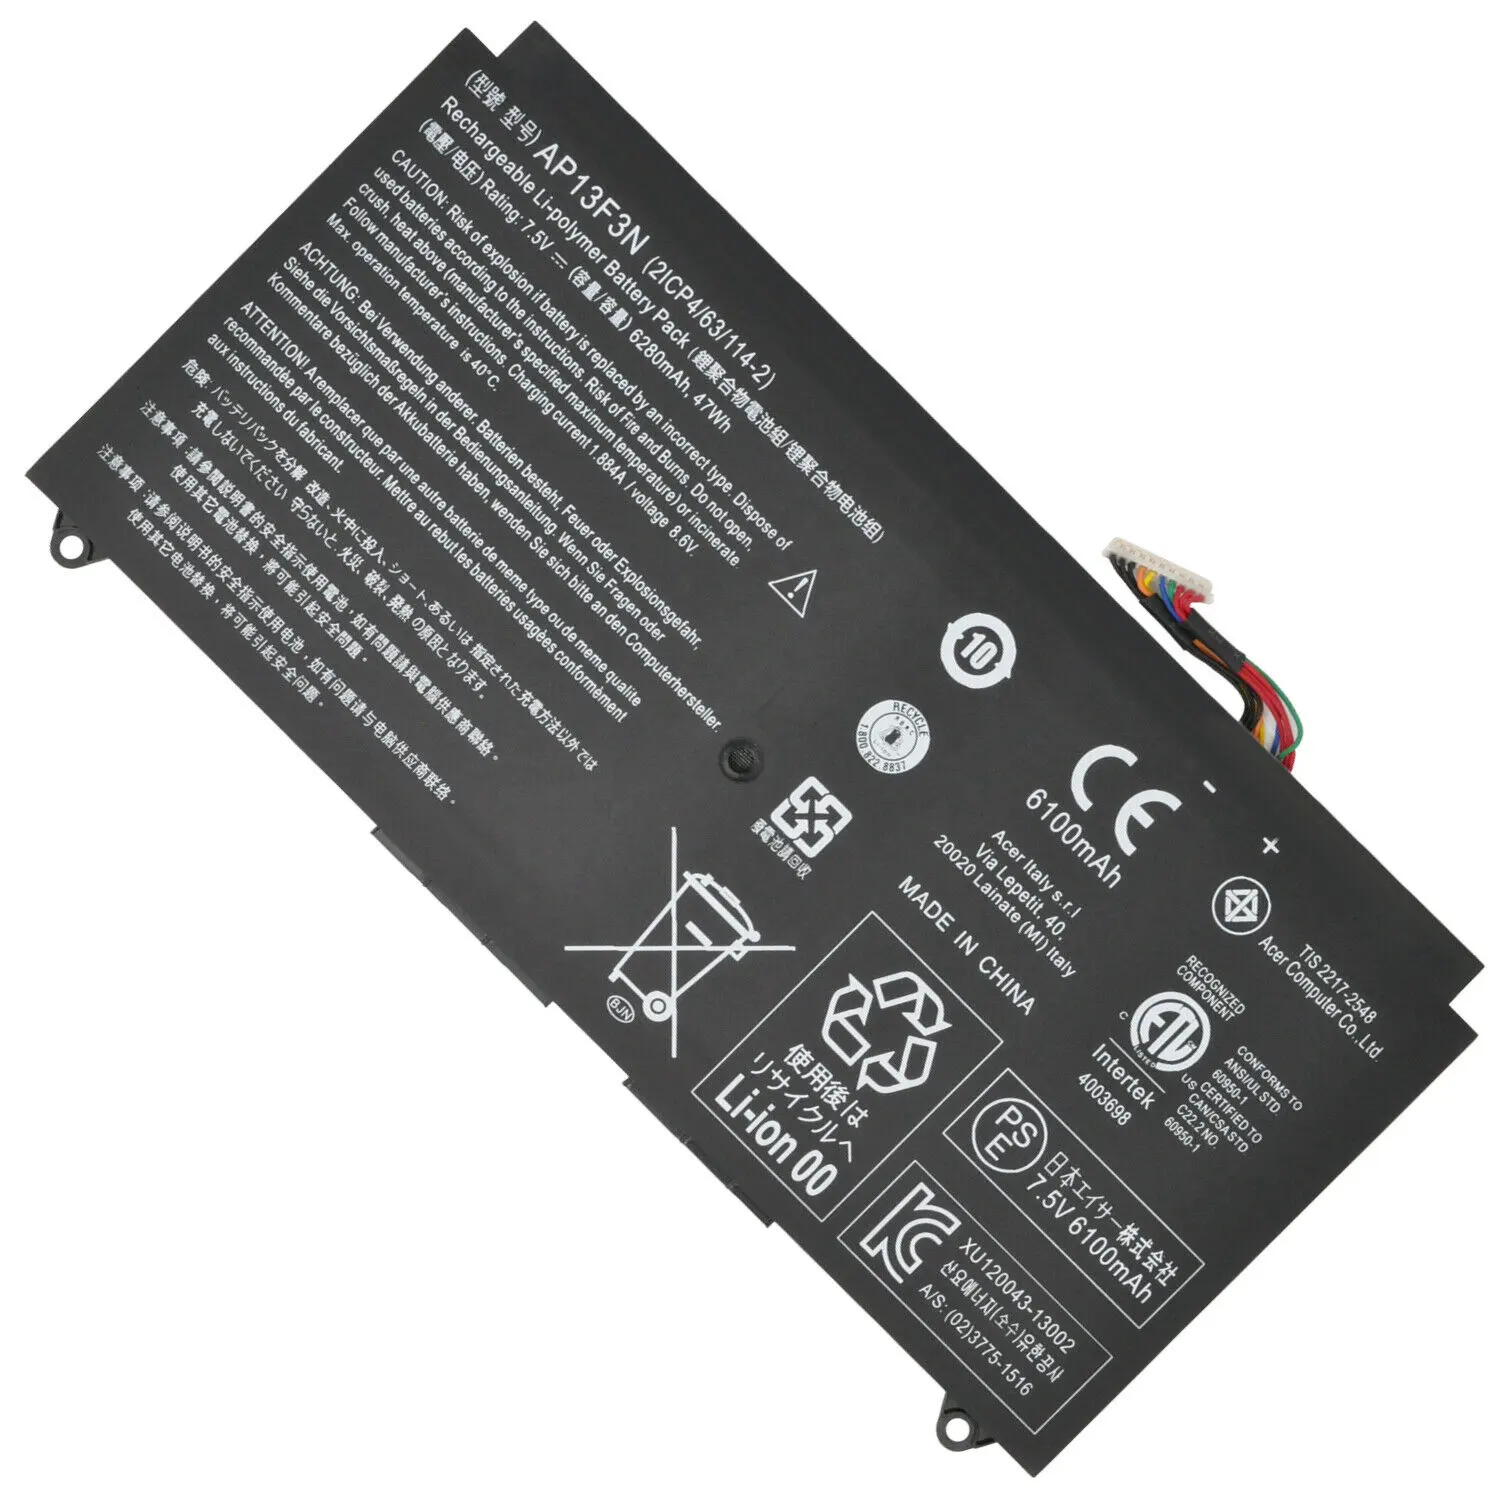 AP13F3N Laptop Battery for Acer Aspire S7-392 S7-393 Ultrabook Series 2ICP4/63